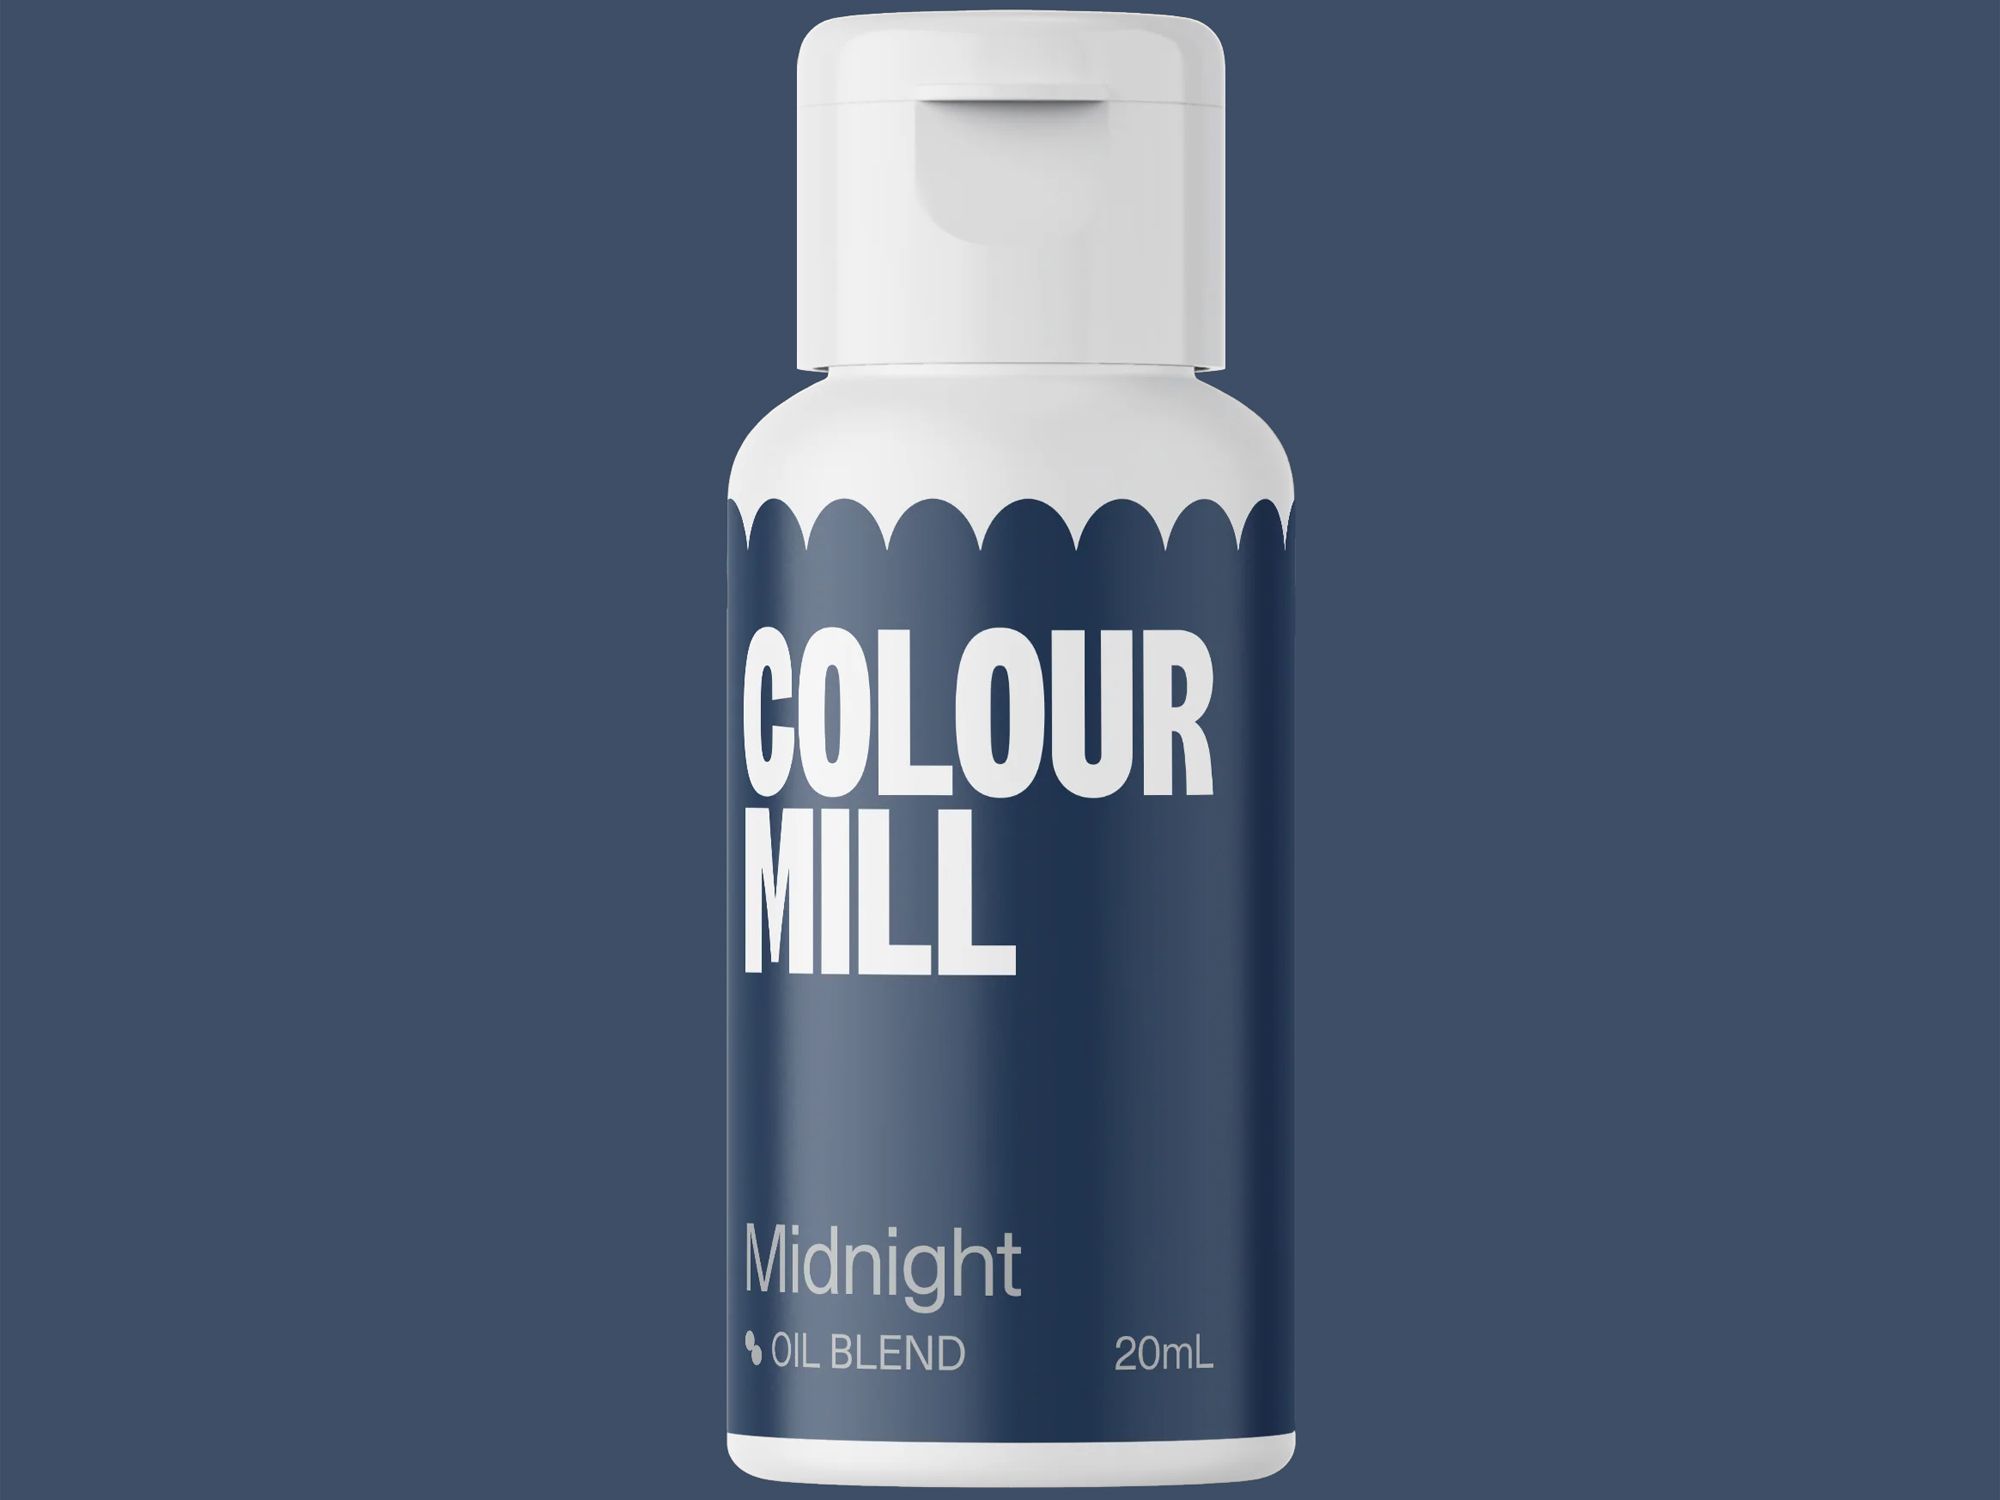 Colour Mill Midnight (Oil Blend) 20ml